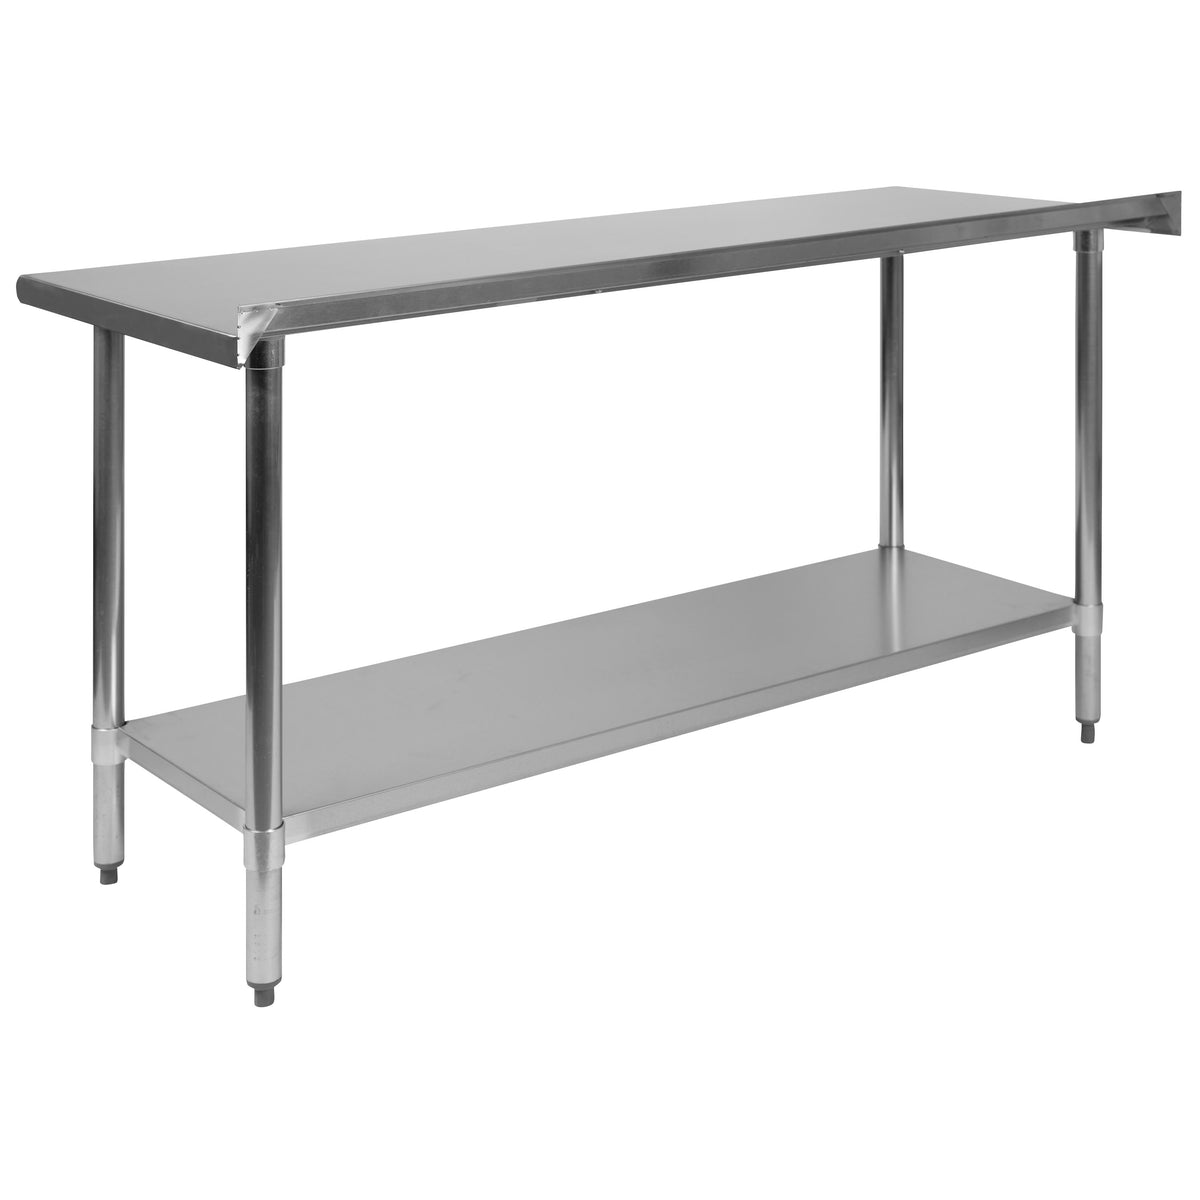 60"W x 24"D |#| Stainless Steel 18 Gauge Work Table with Backsplash and Shelf, NSF - 60"W x 24"D